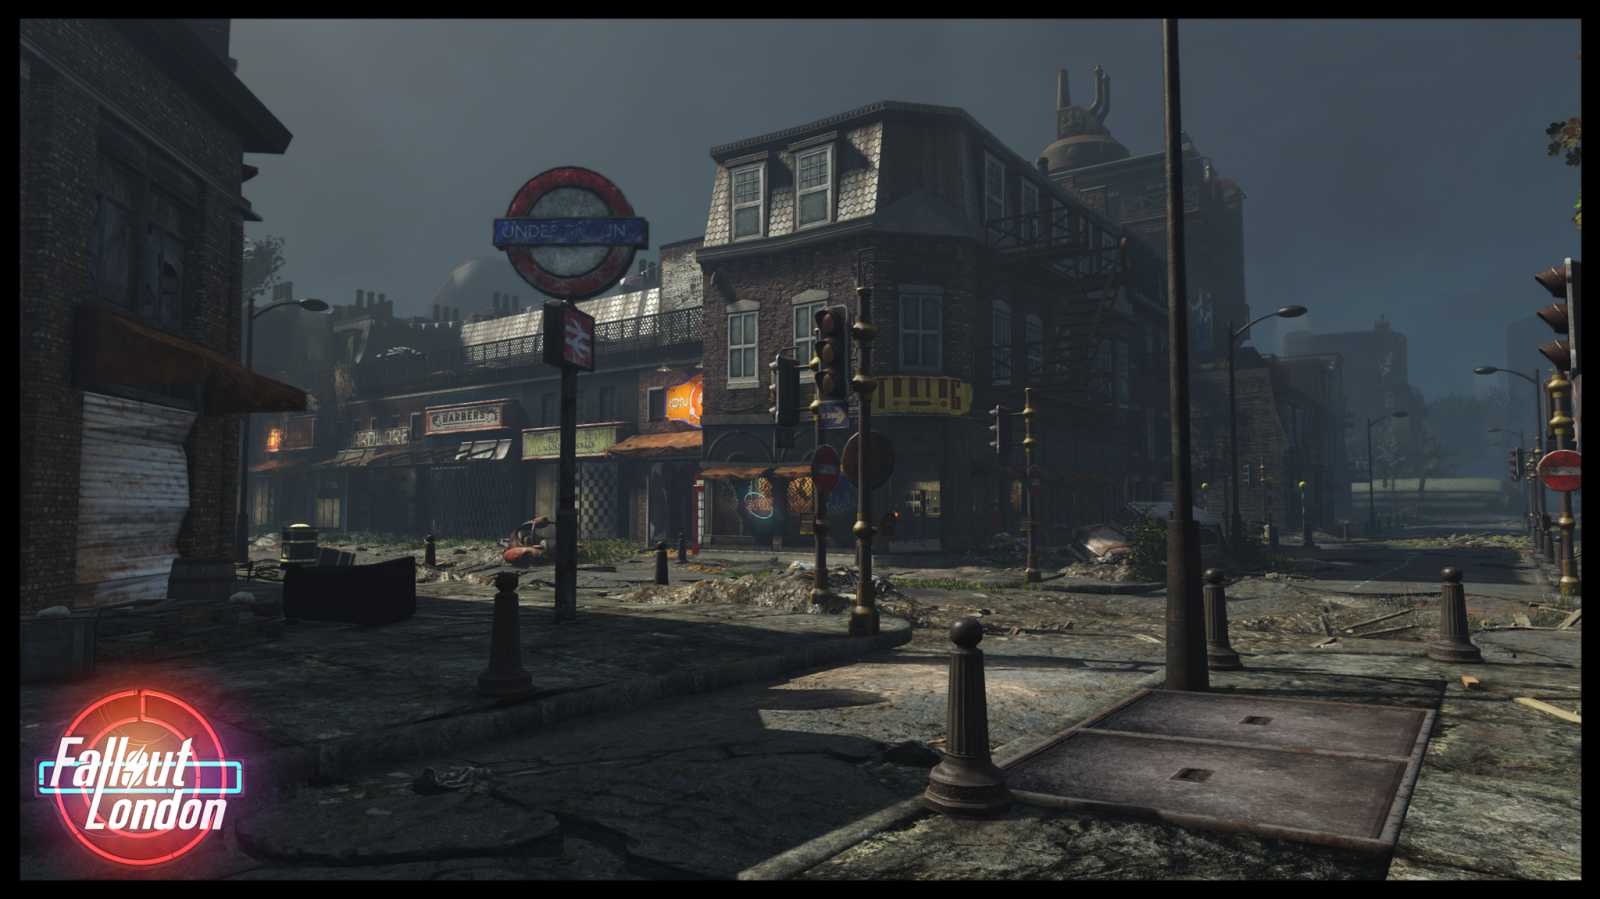 Fallout London